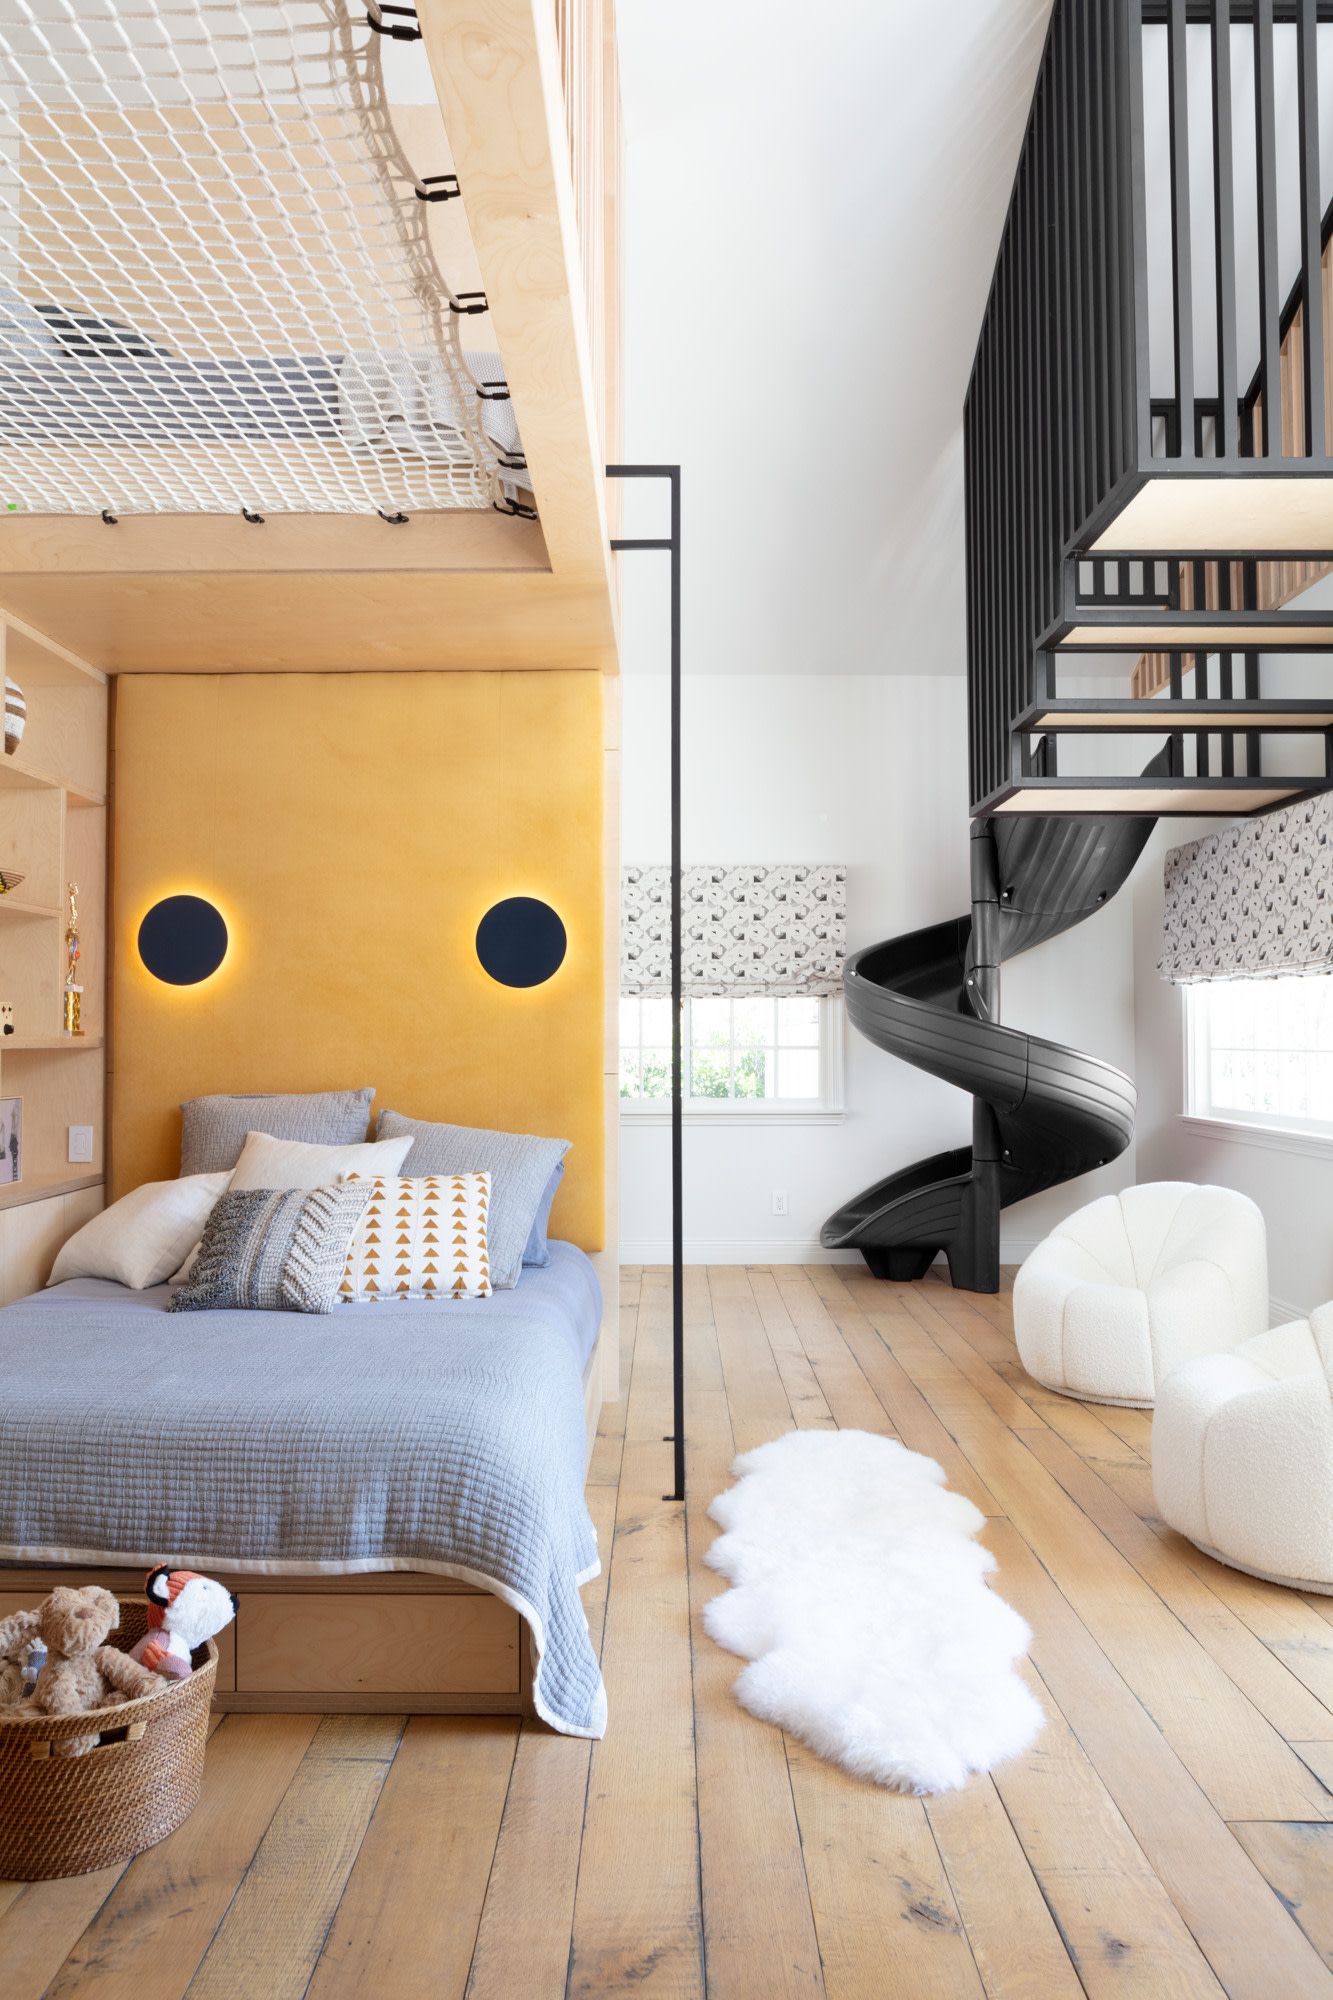 31 Best Boys Bedroom Ideas In 2020 Boys Room Design